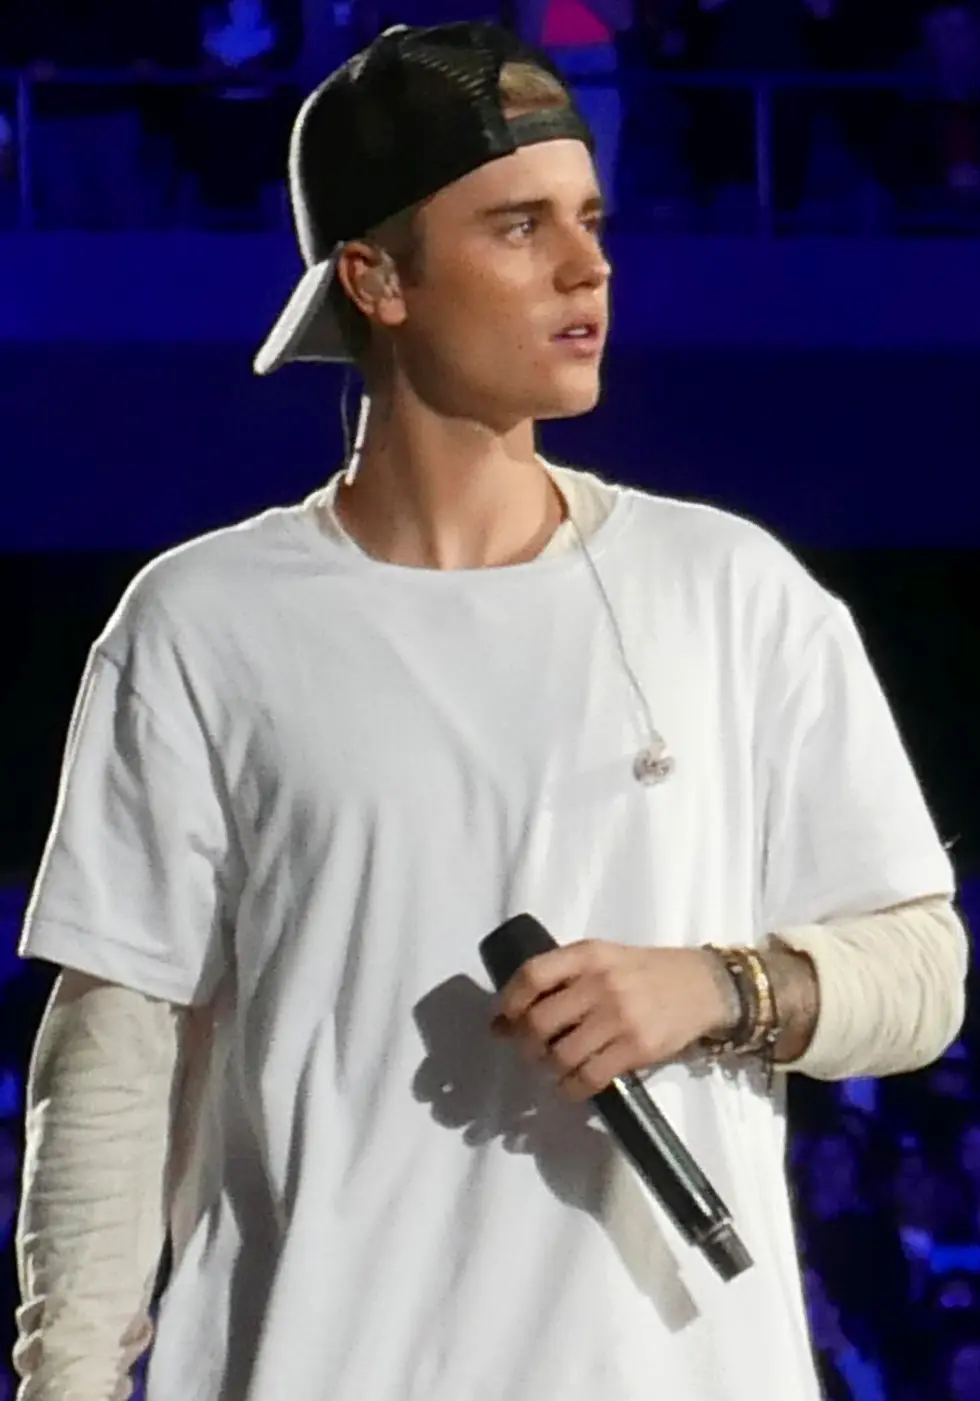 justin bieber ferrari west coast customs - Why Justin Bieber is so famous